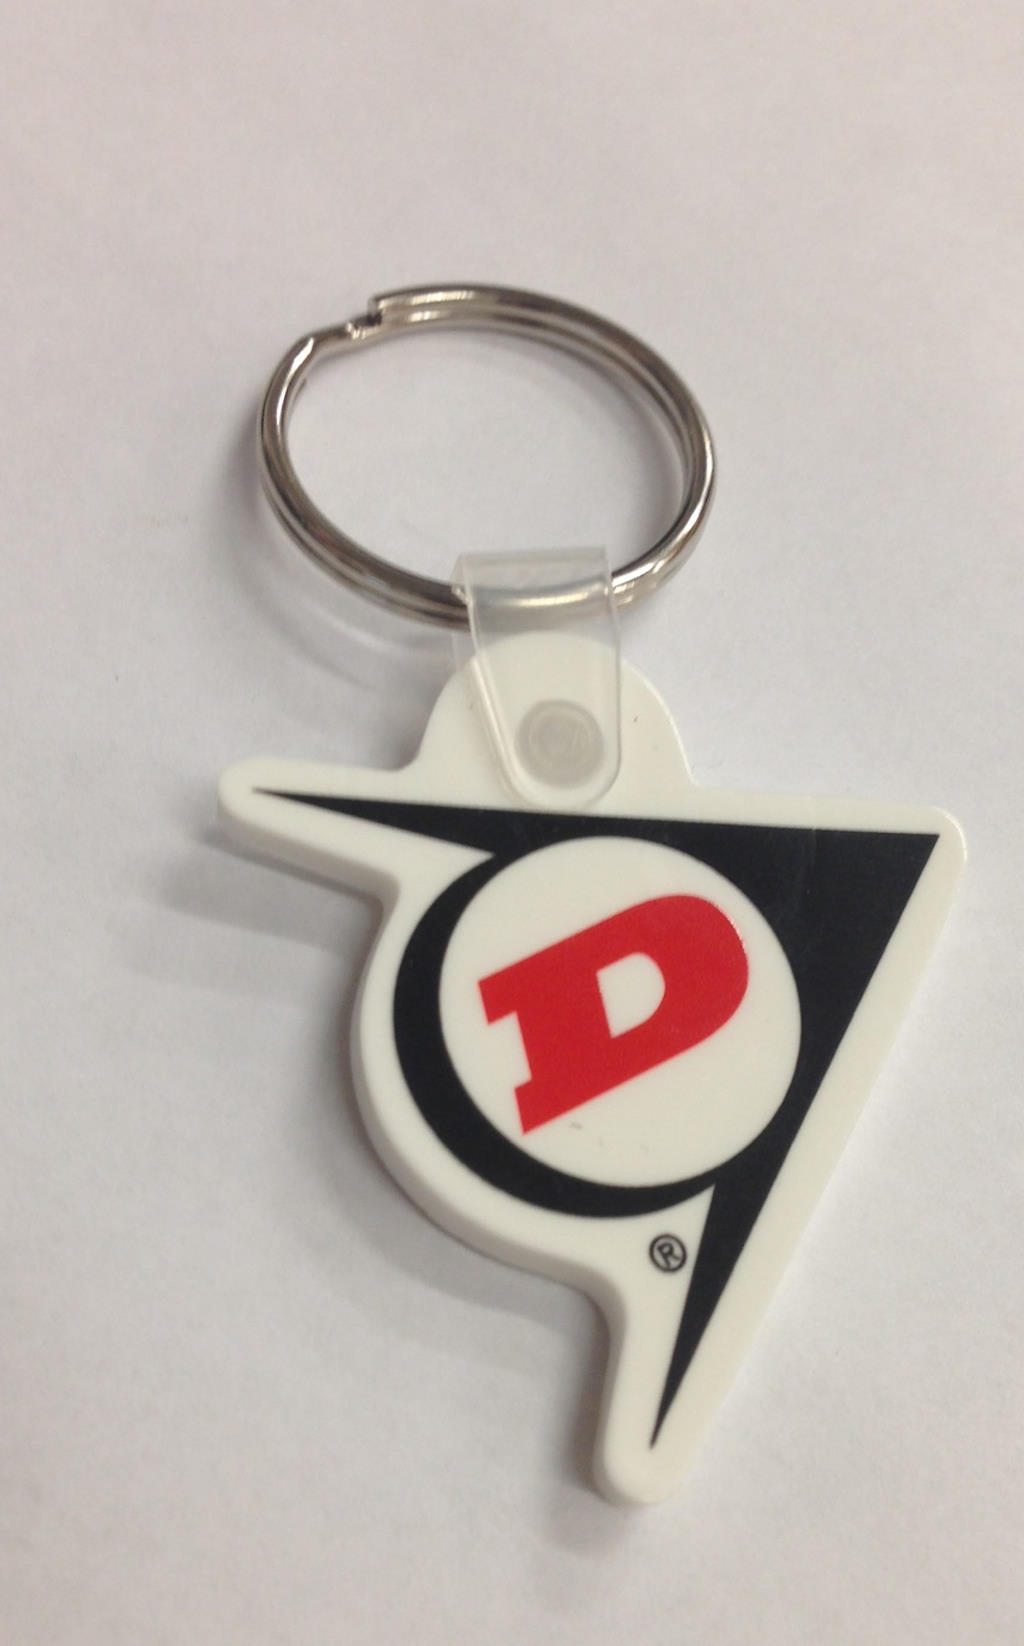 Dunlop Tires "D" Logo single Sided Keychain Keyfob Black & White